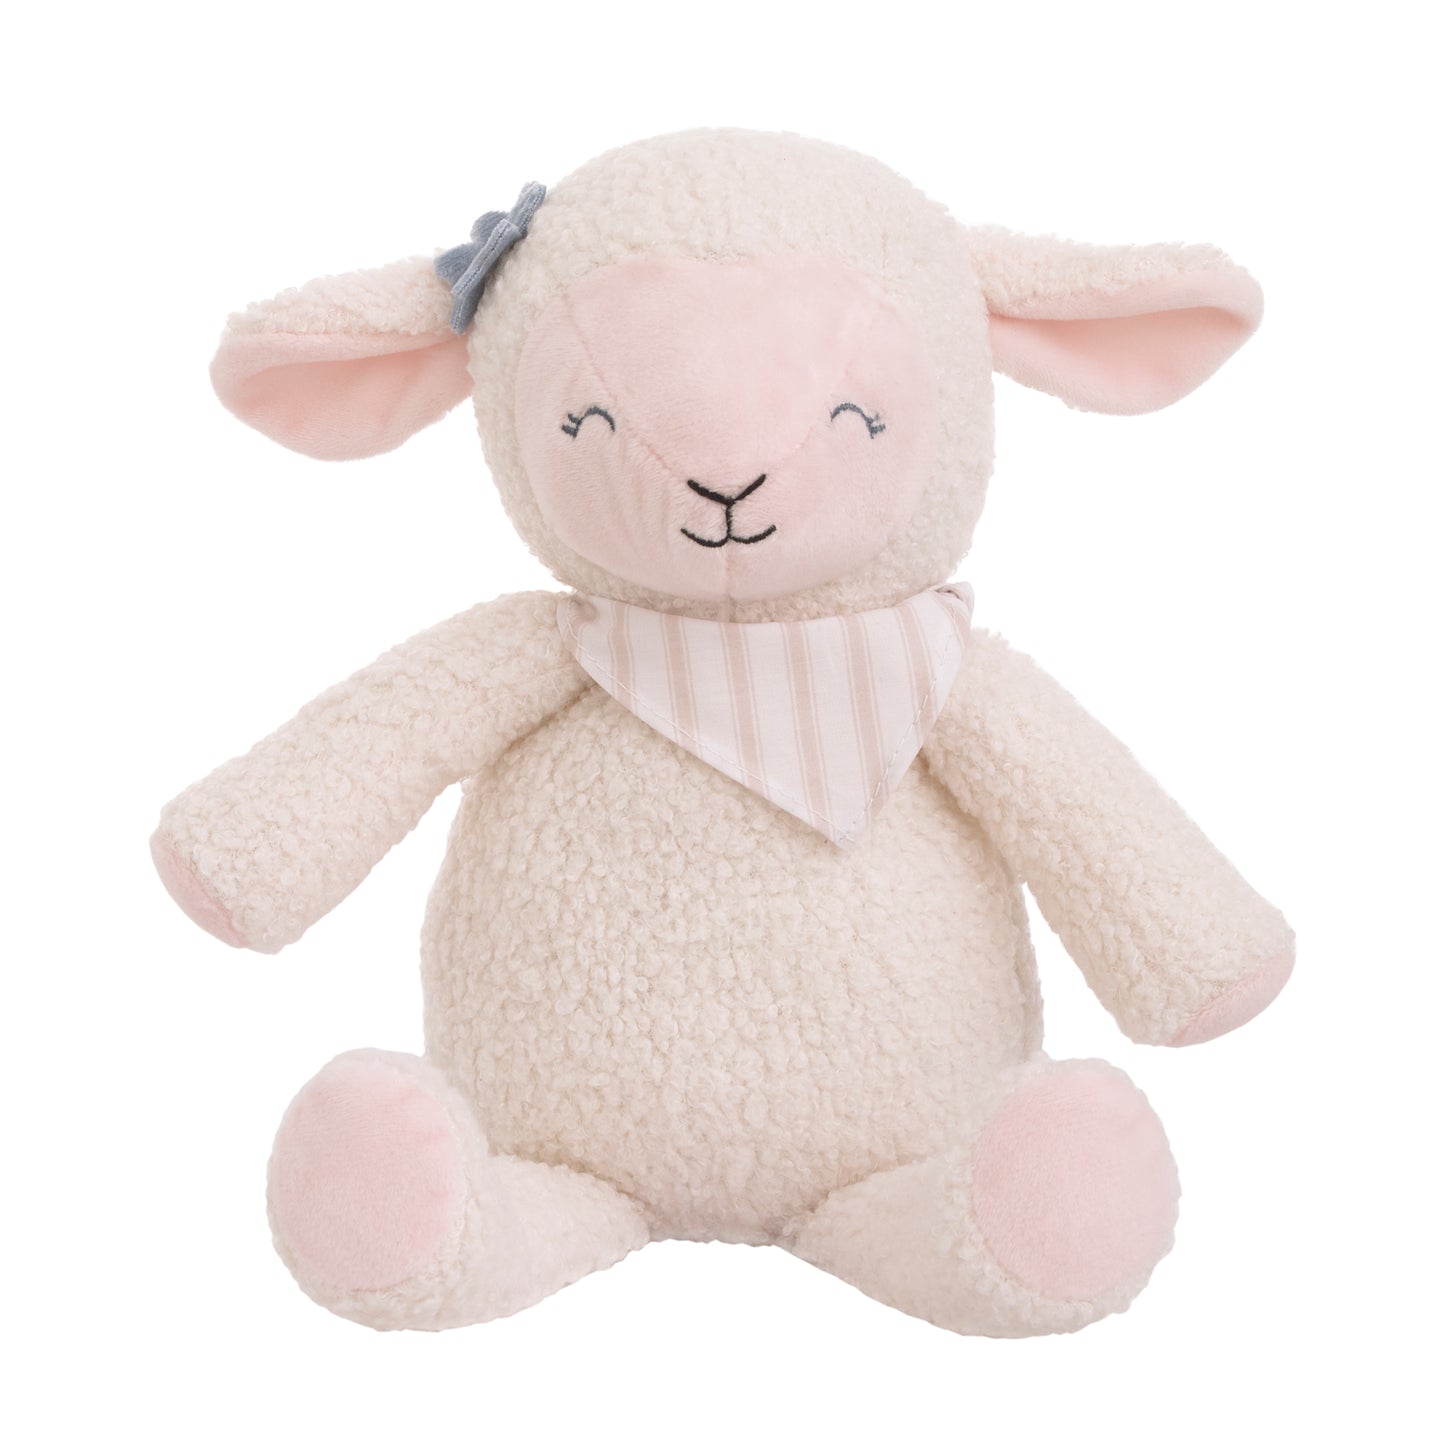 NoJo Farmhouse Chic Pink and White Super Soft Plush Stuffed Animal Lamb with Bandana - "Meadow"